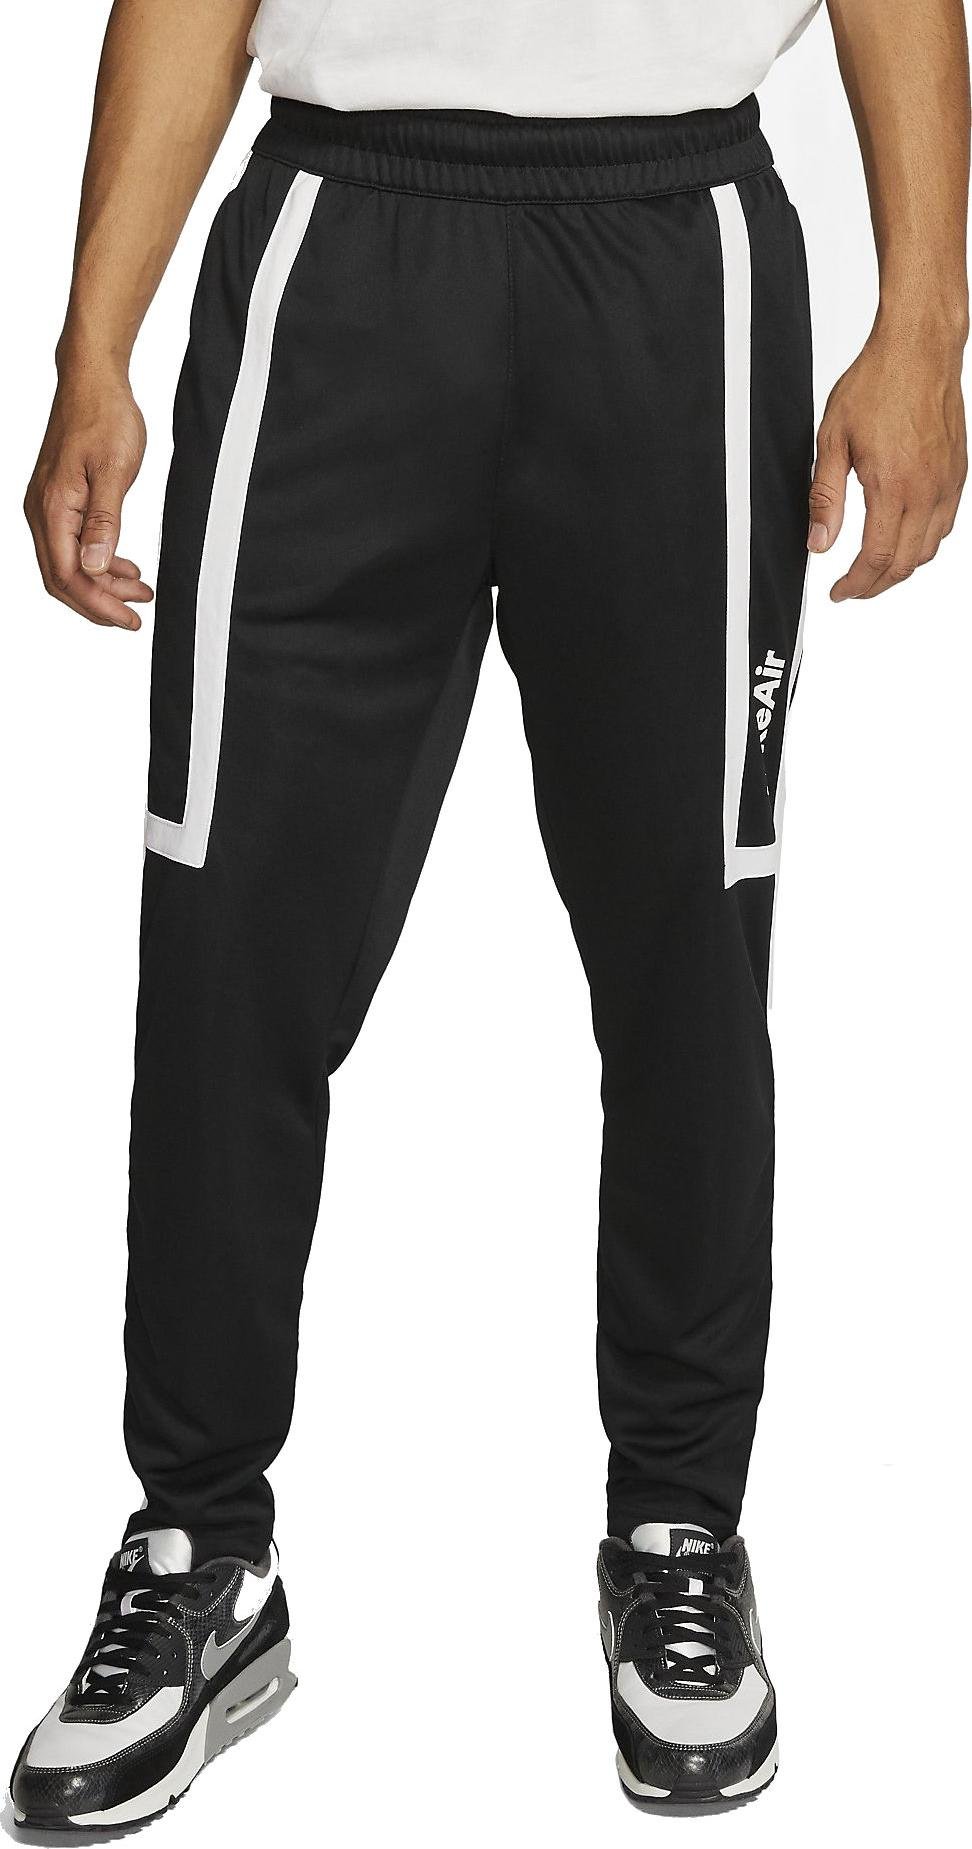 Pants Nike M NSW AIR PANT PK 